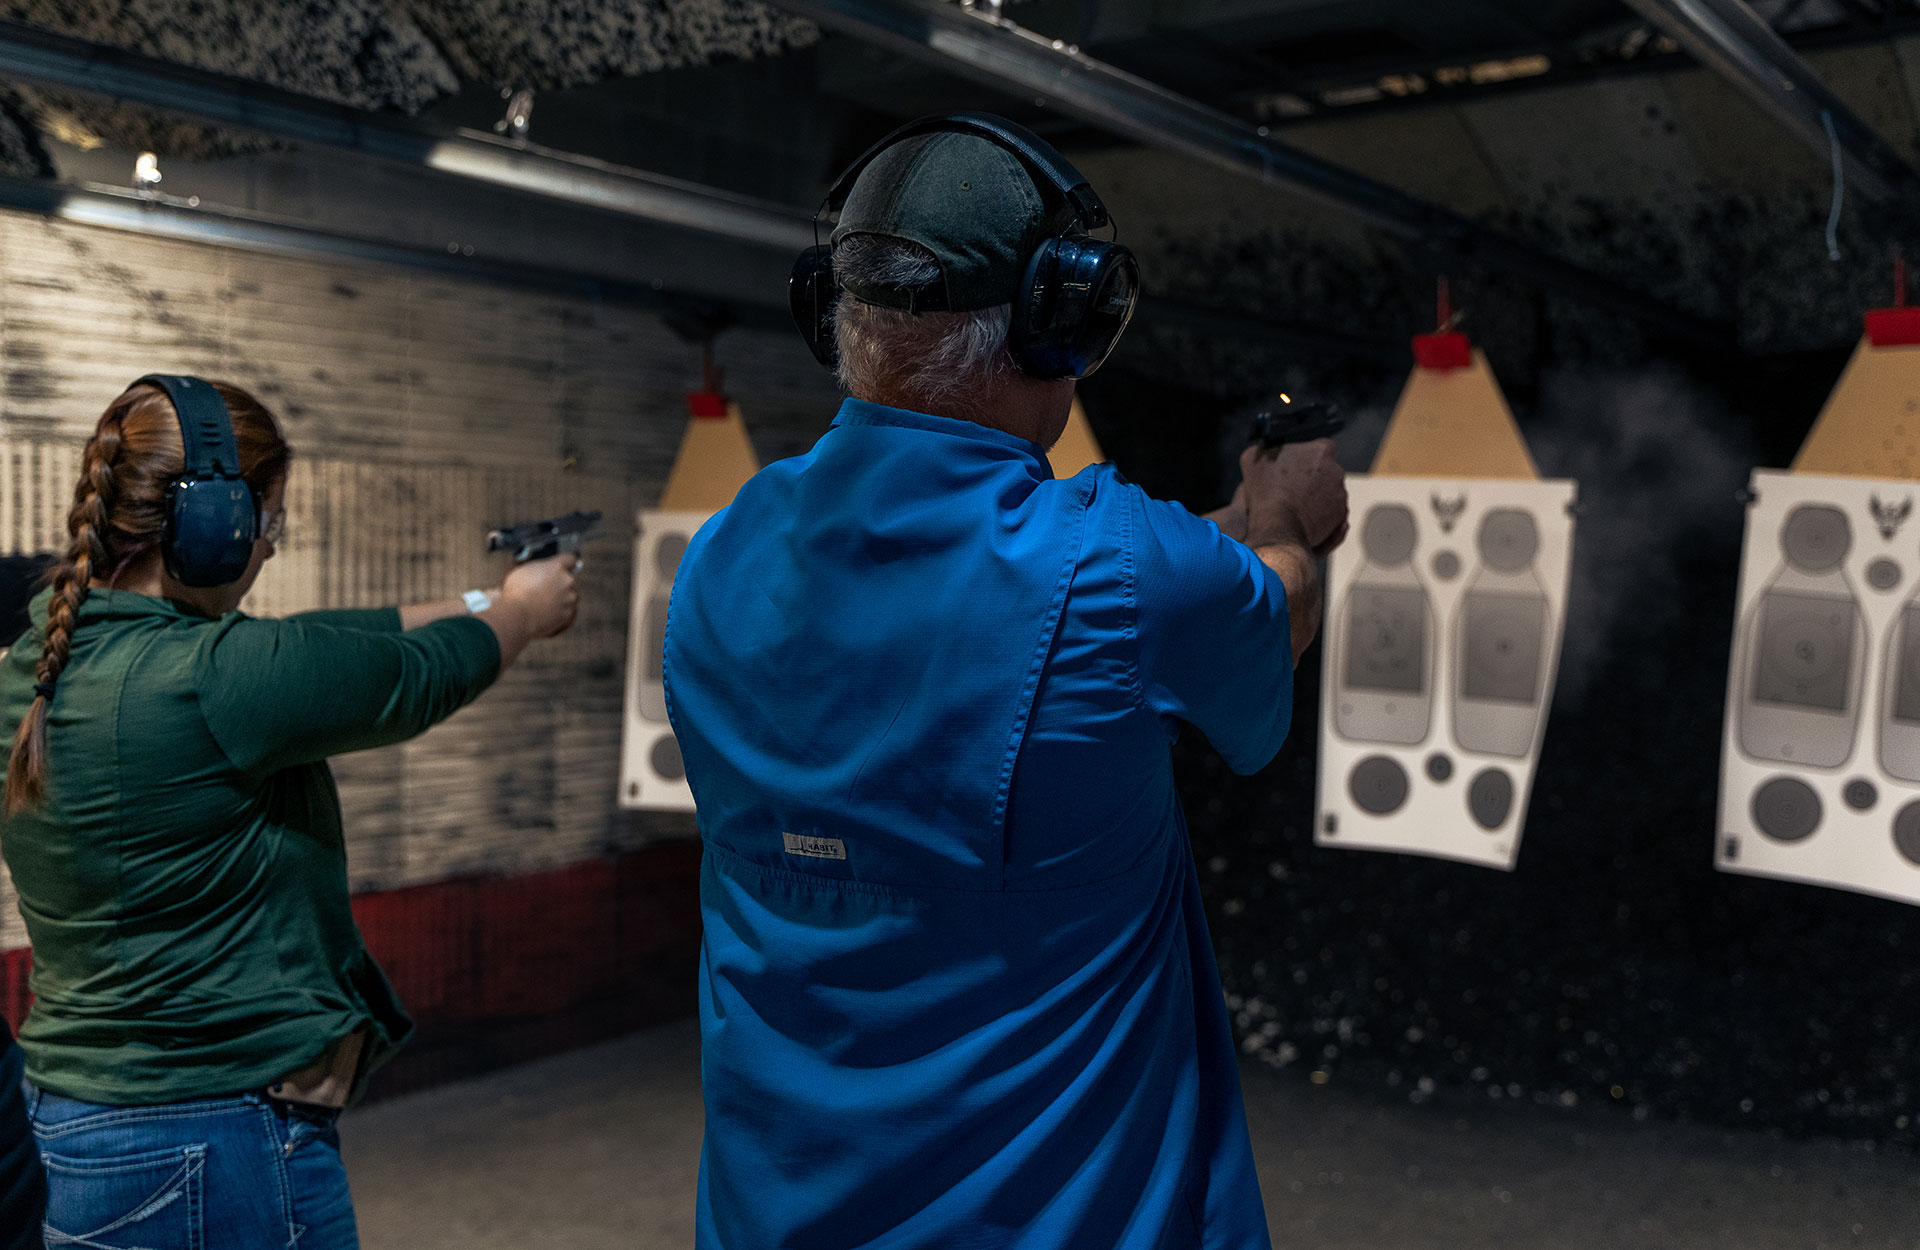 Man and women aim gun at indoor target